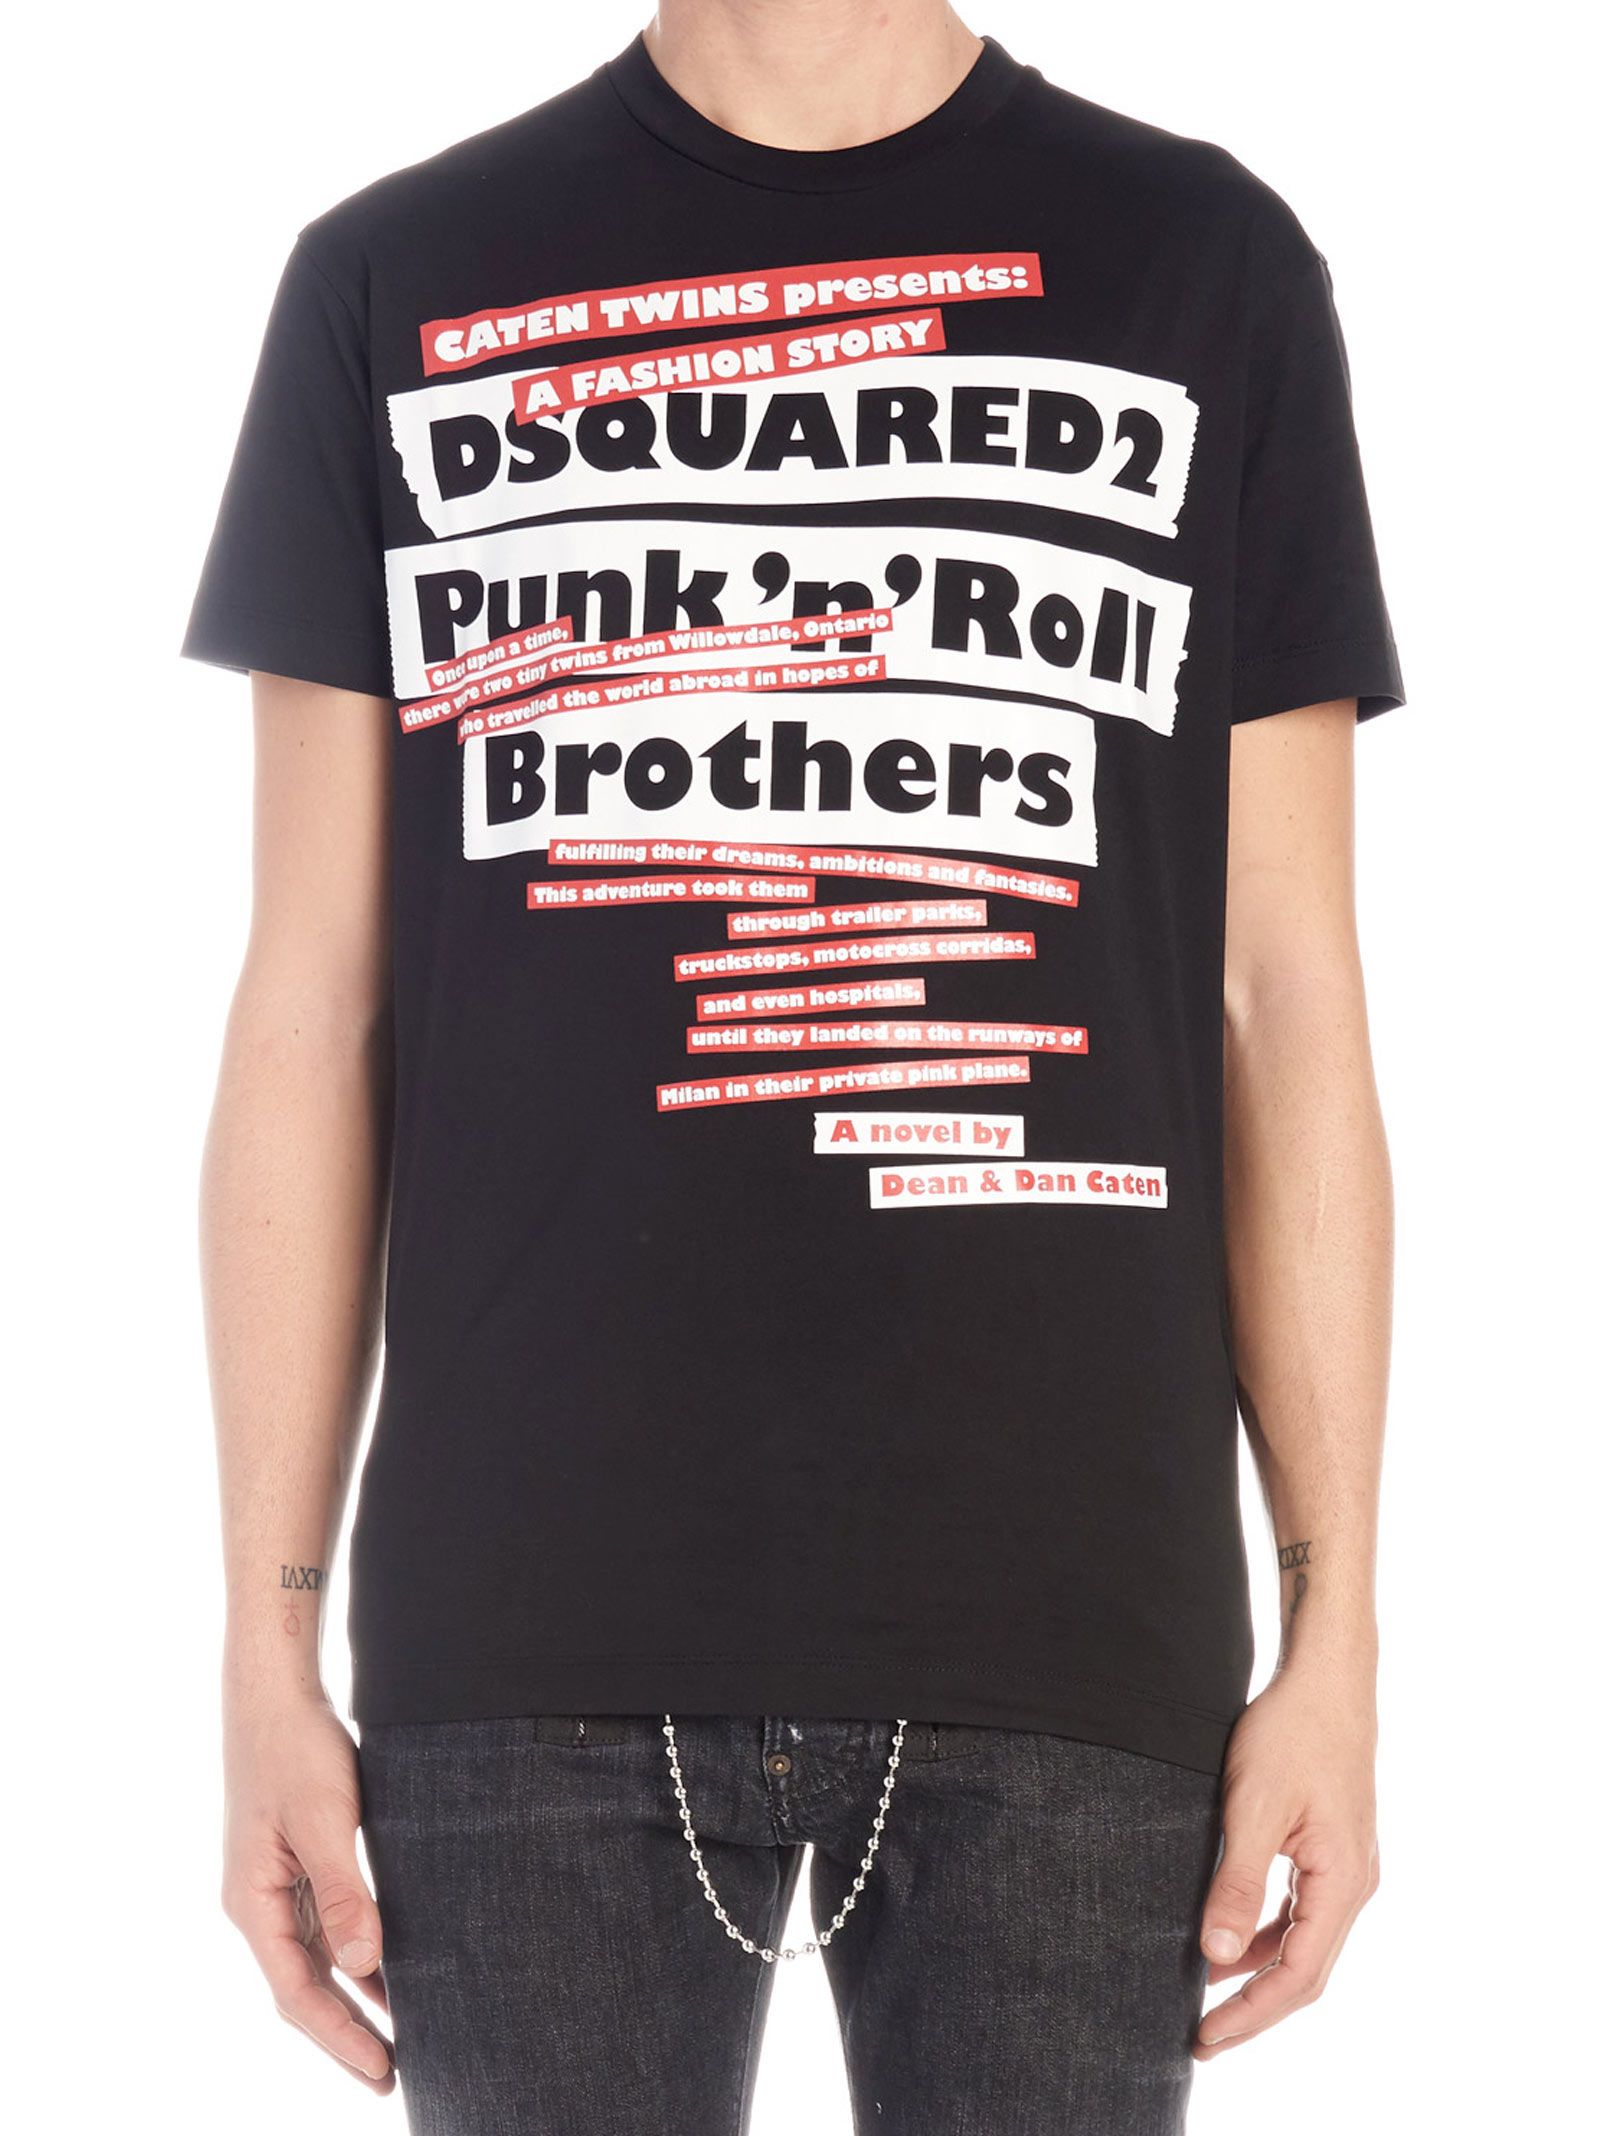 dsquared punk n roll t shirt